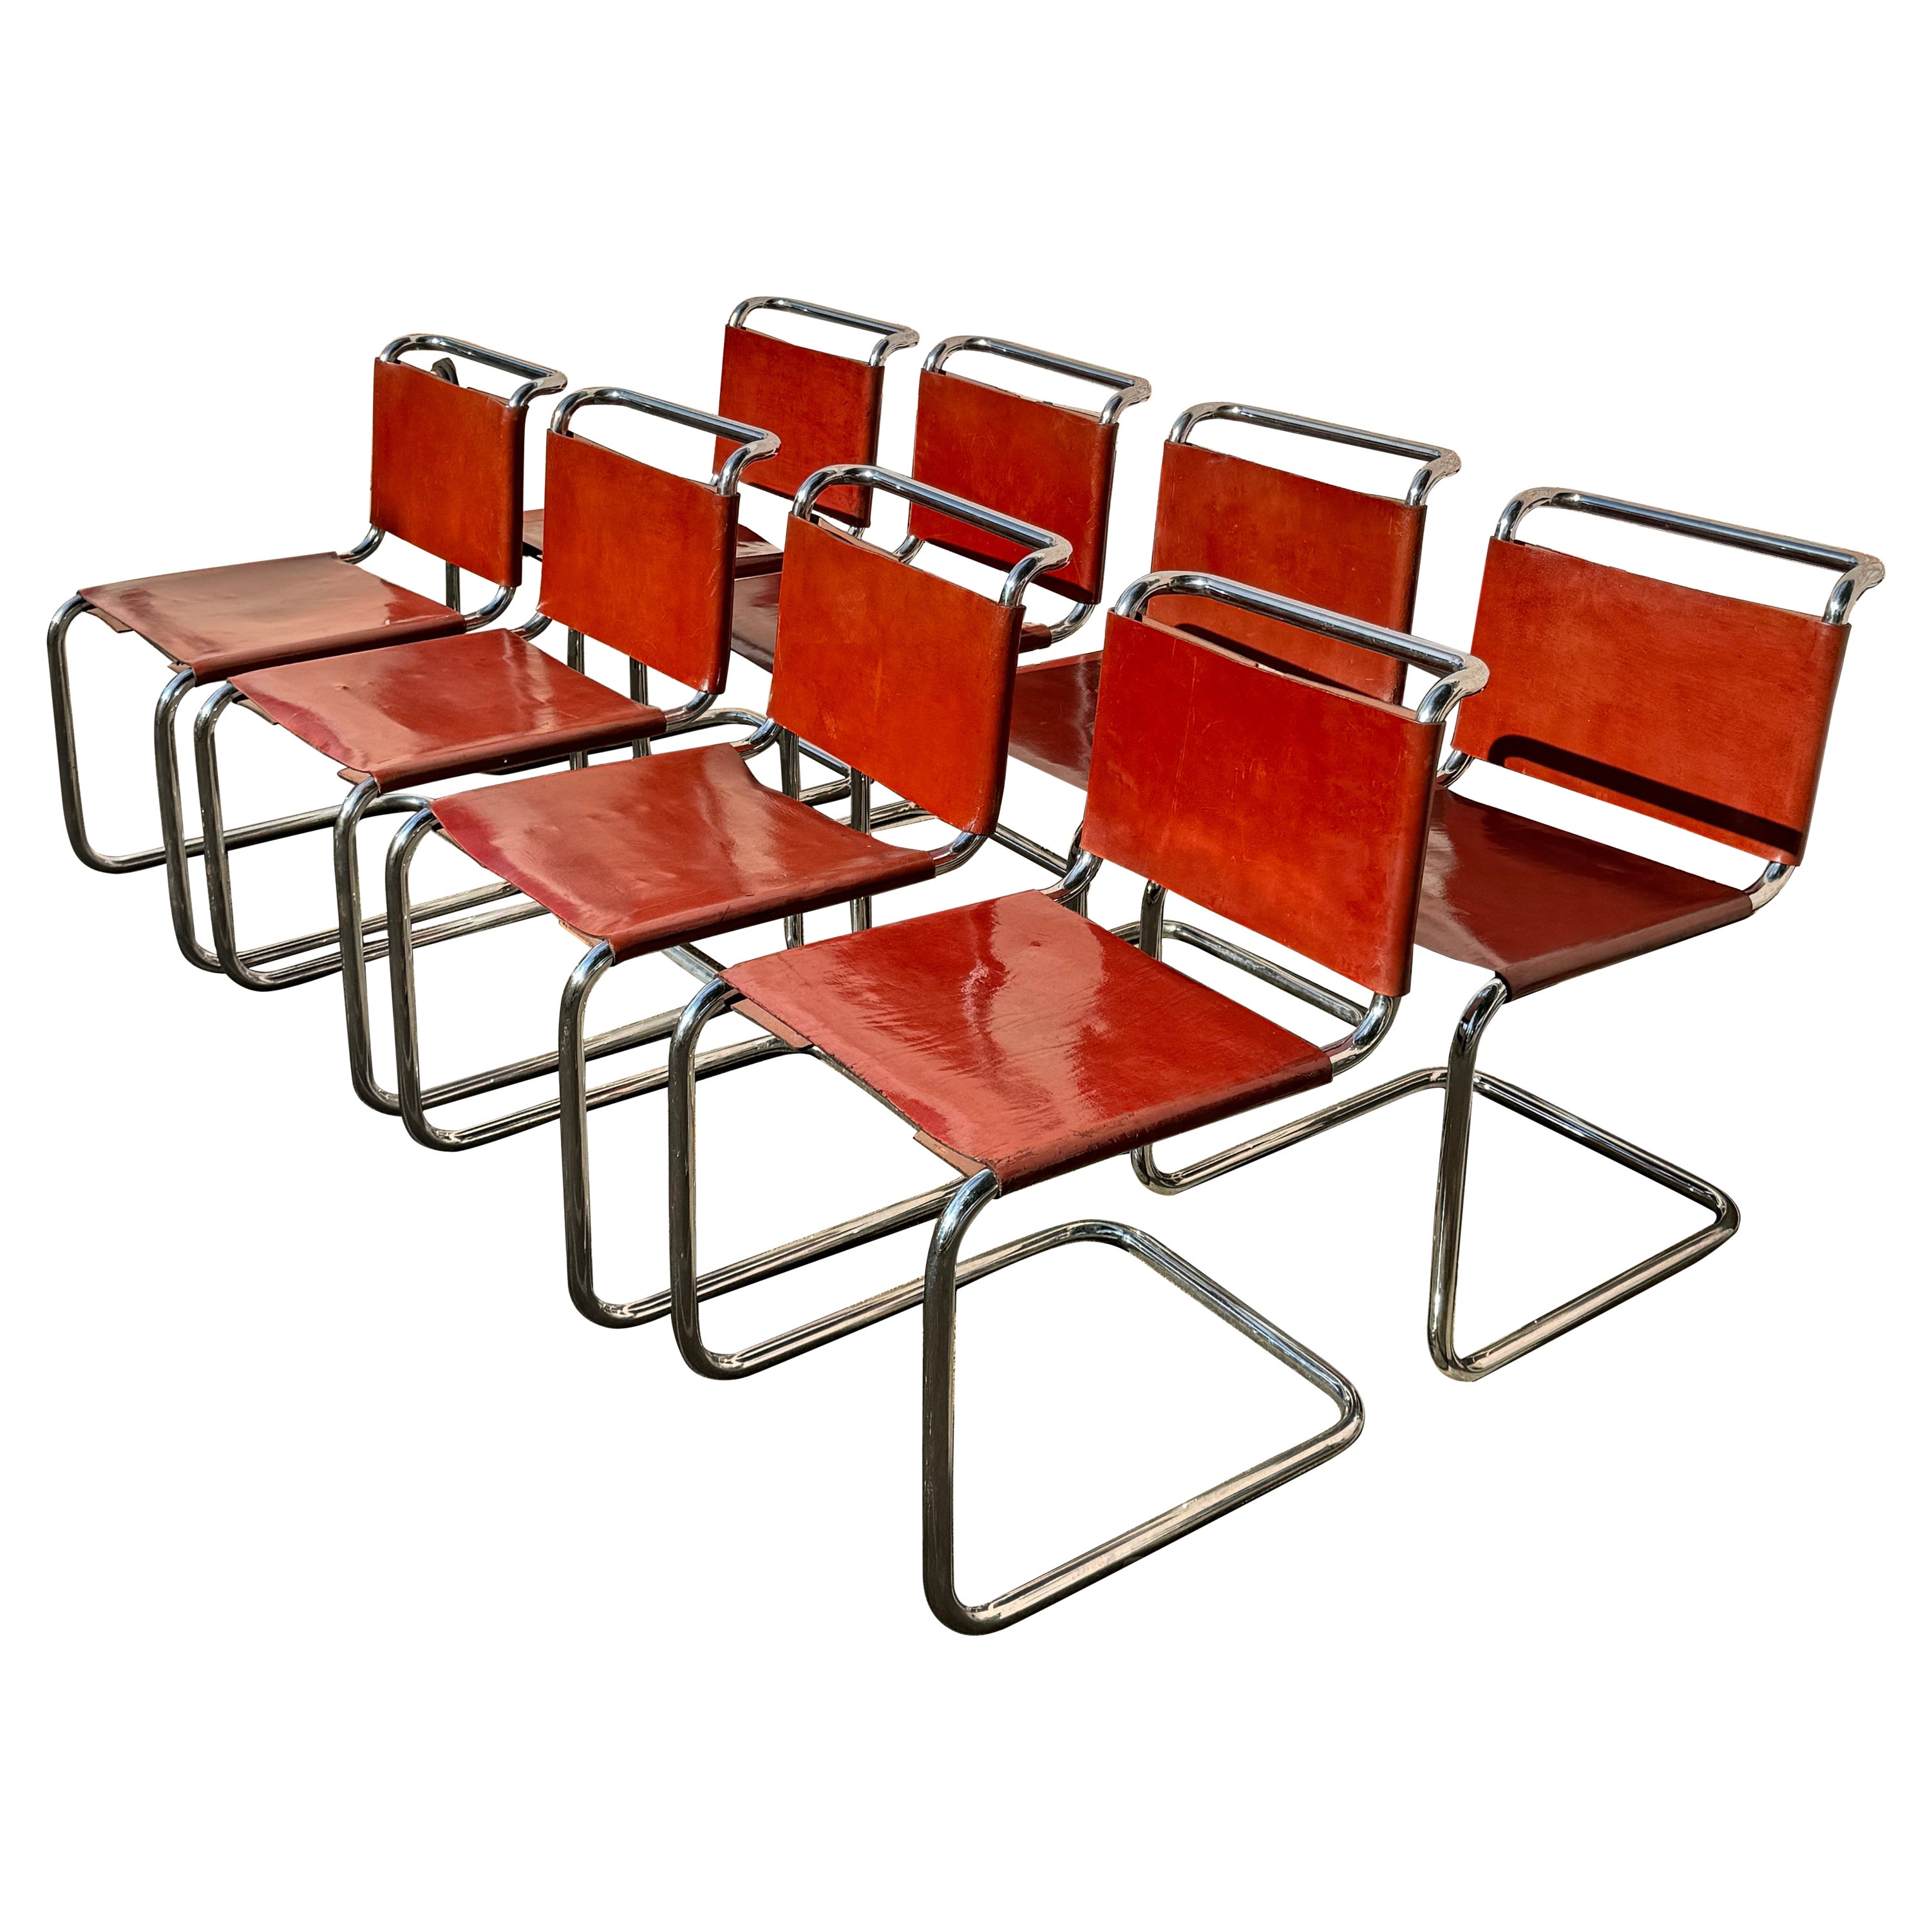 A set of 8 original Spoleto b33 chairs for Knoll, circa 1970s